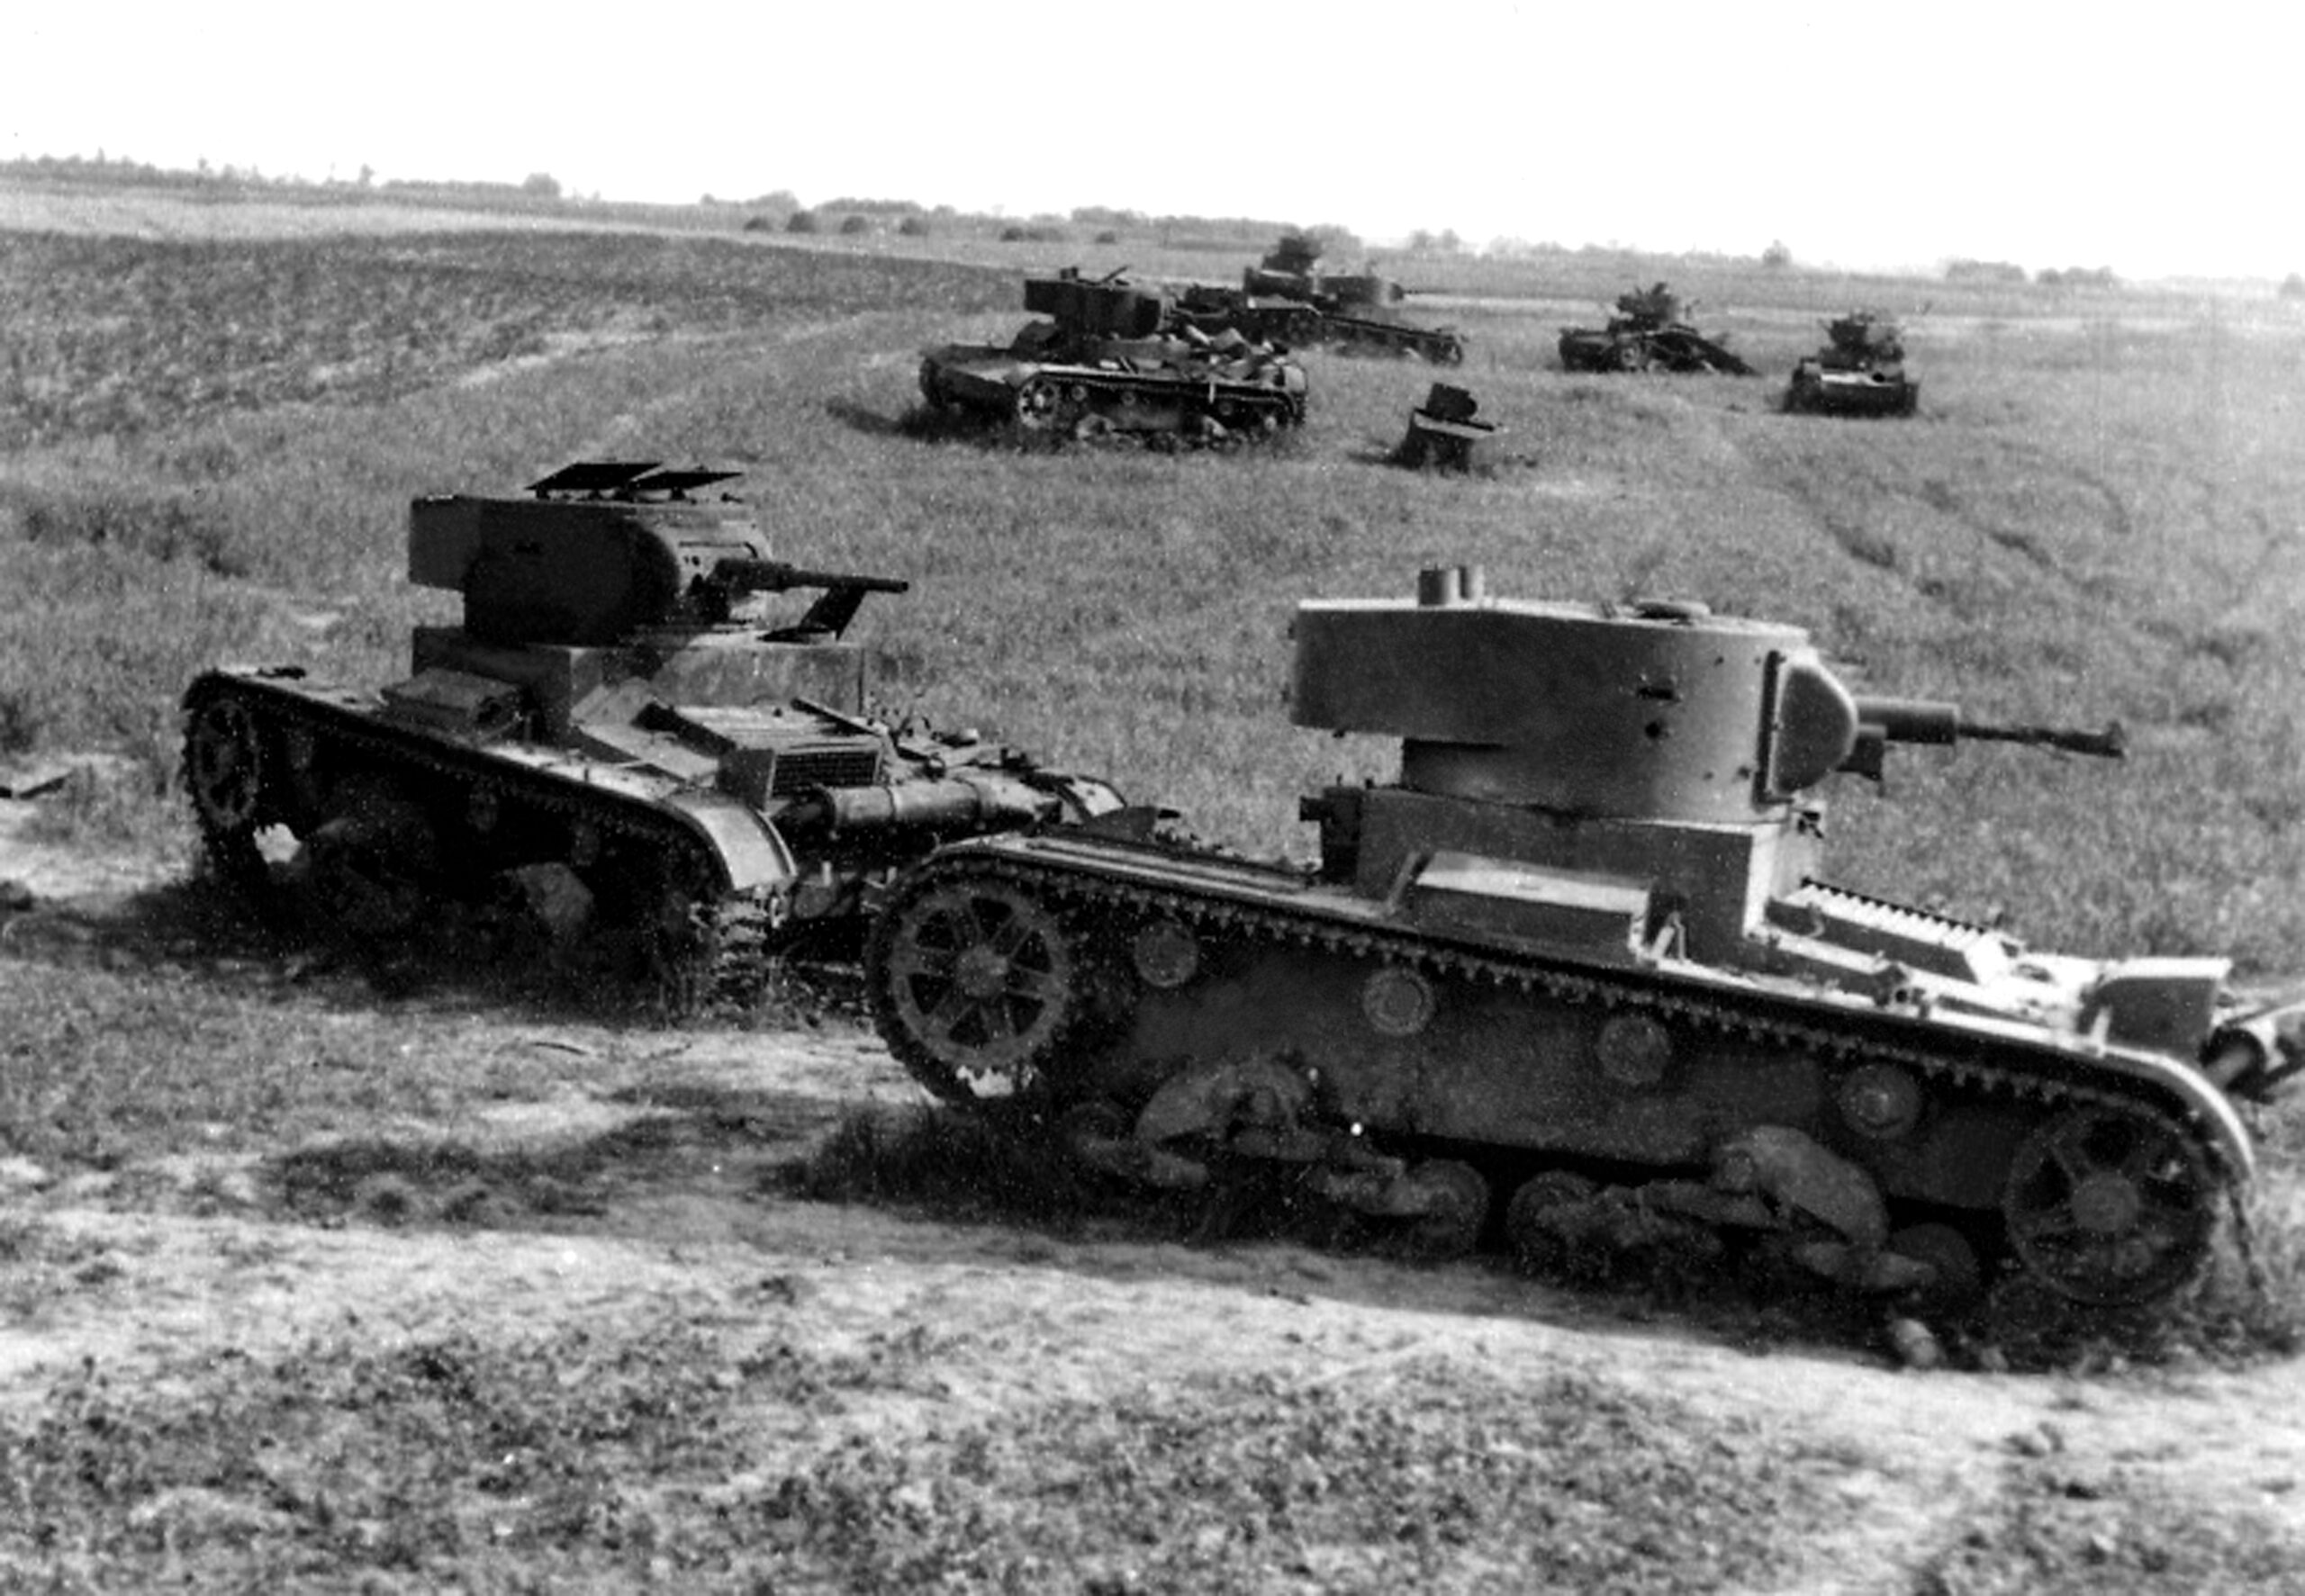 23 июня 1941 г. Битва за Дубно Луцк Броды 1941. Танковое сражение 1941 Луцк Броды. Битва под Дубно 1941 танковая. Дубно-Луцк-Броды в 1941.